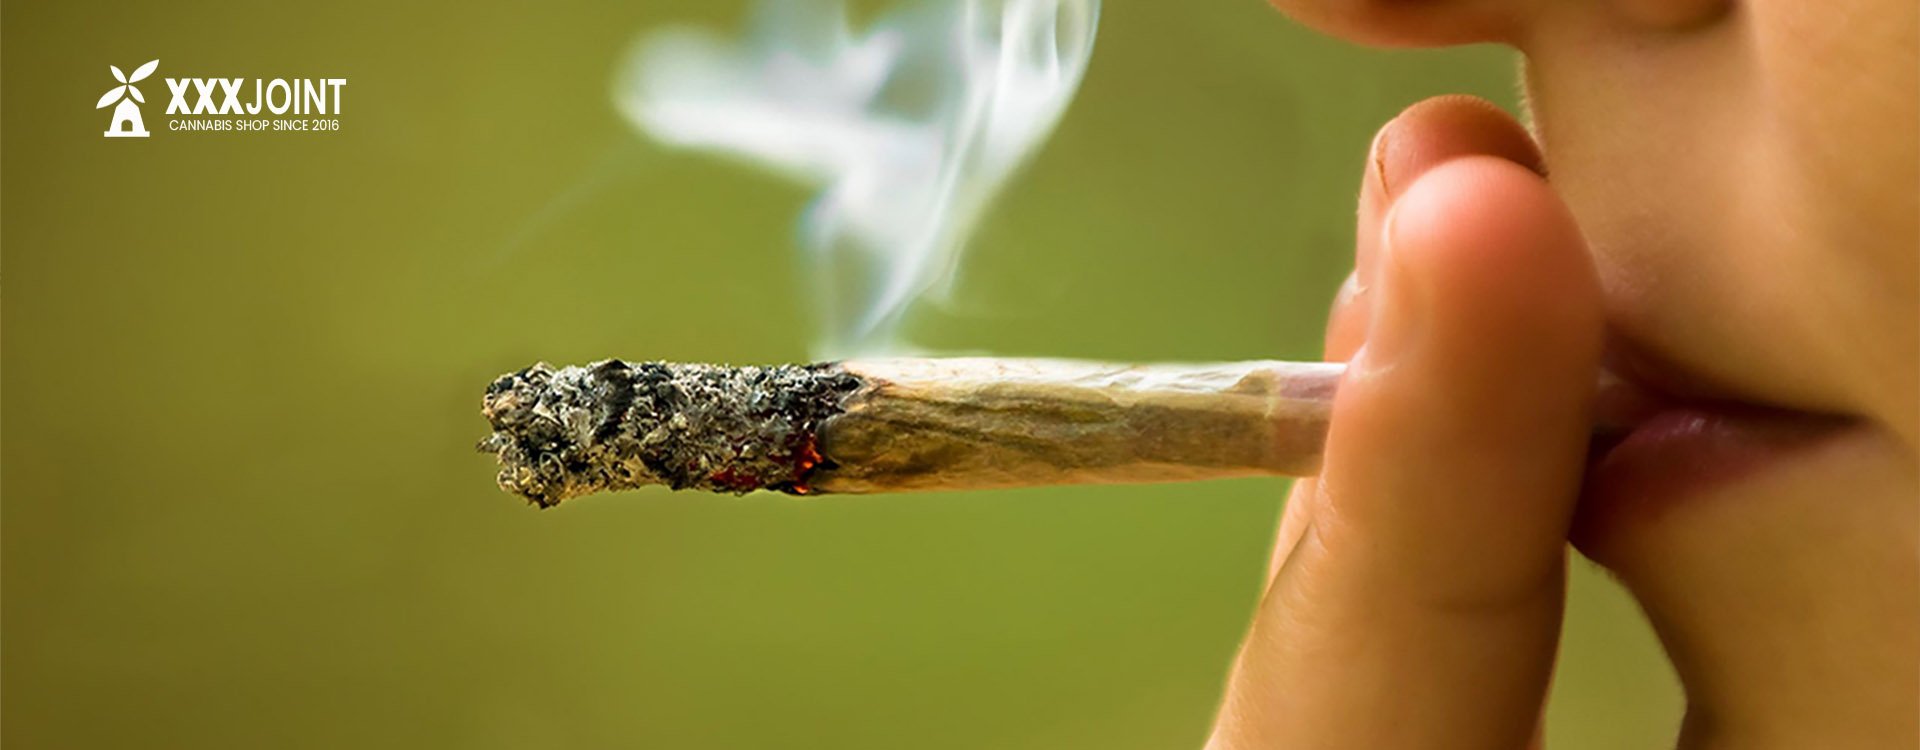 https://www.xxxjoint.it/img/ybc_blog/post/fumare-cannabis-legale-xxxjoint.jpg